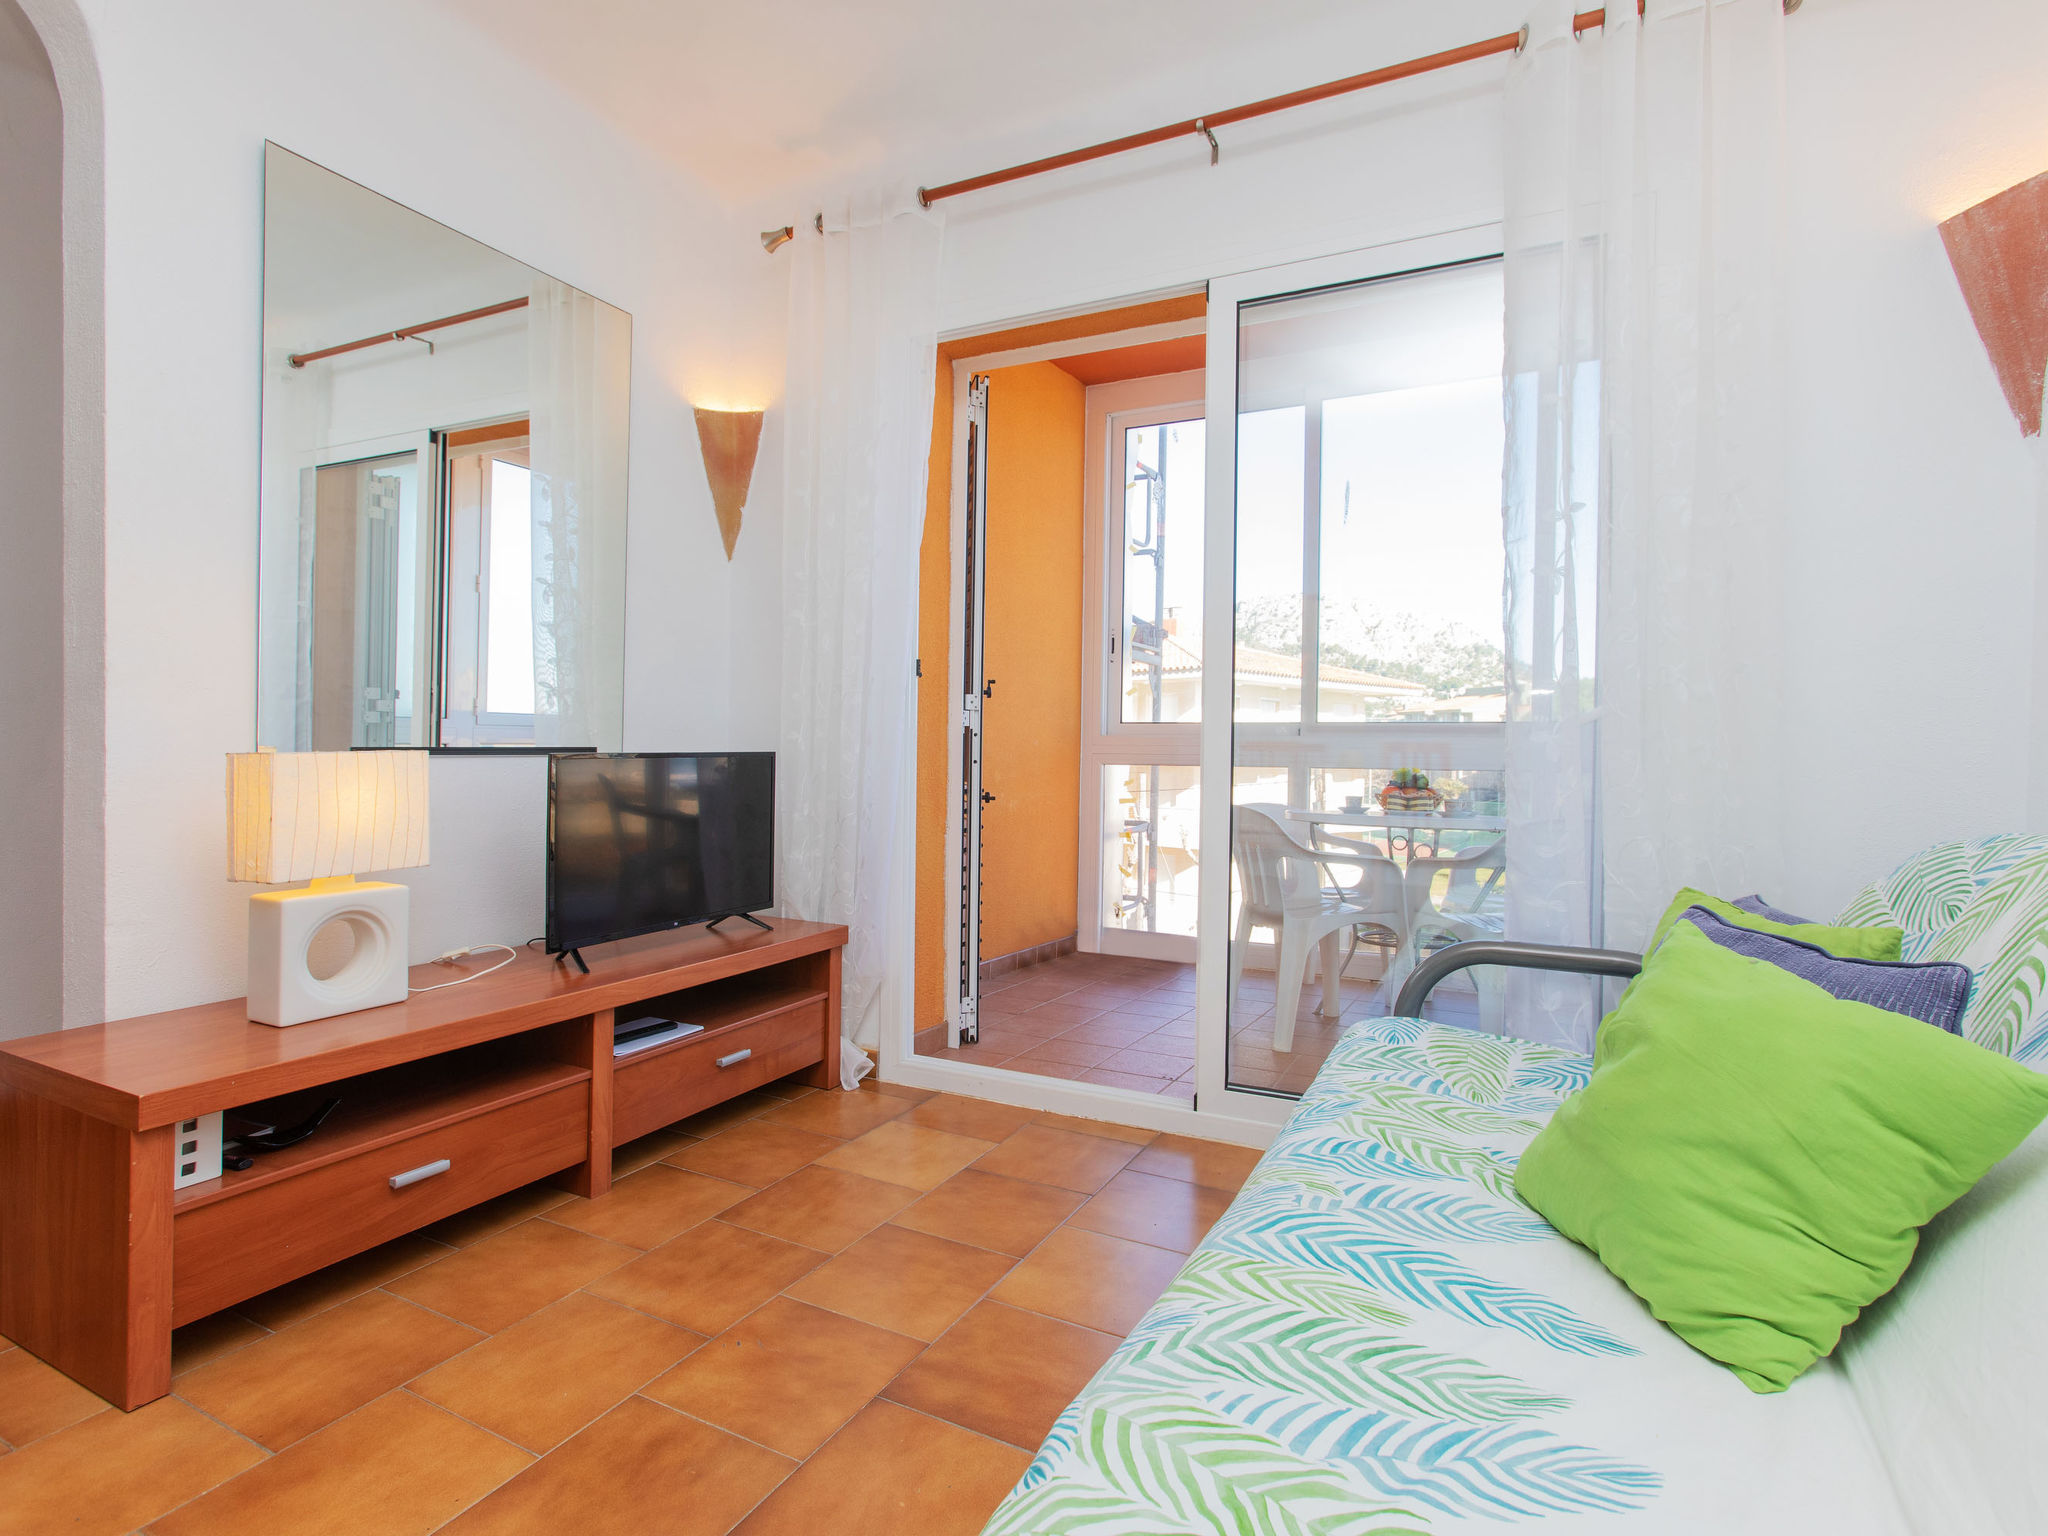 Photo 9 - Appartement de 2 chambres à Torroella de Montgrí avec vues à la mer